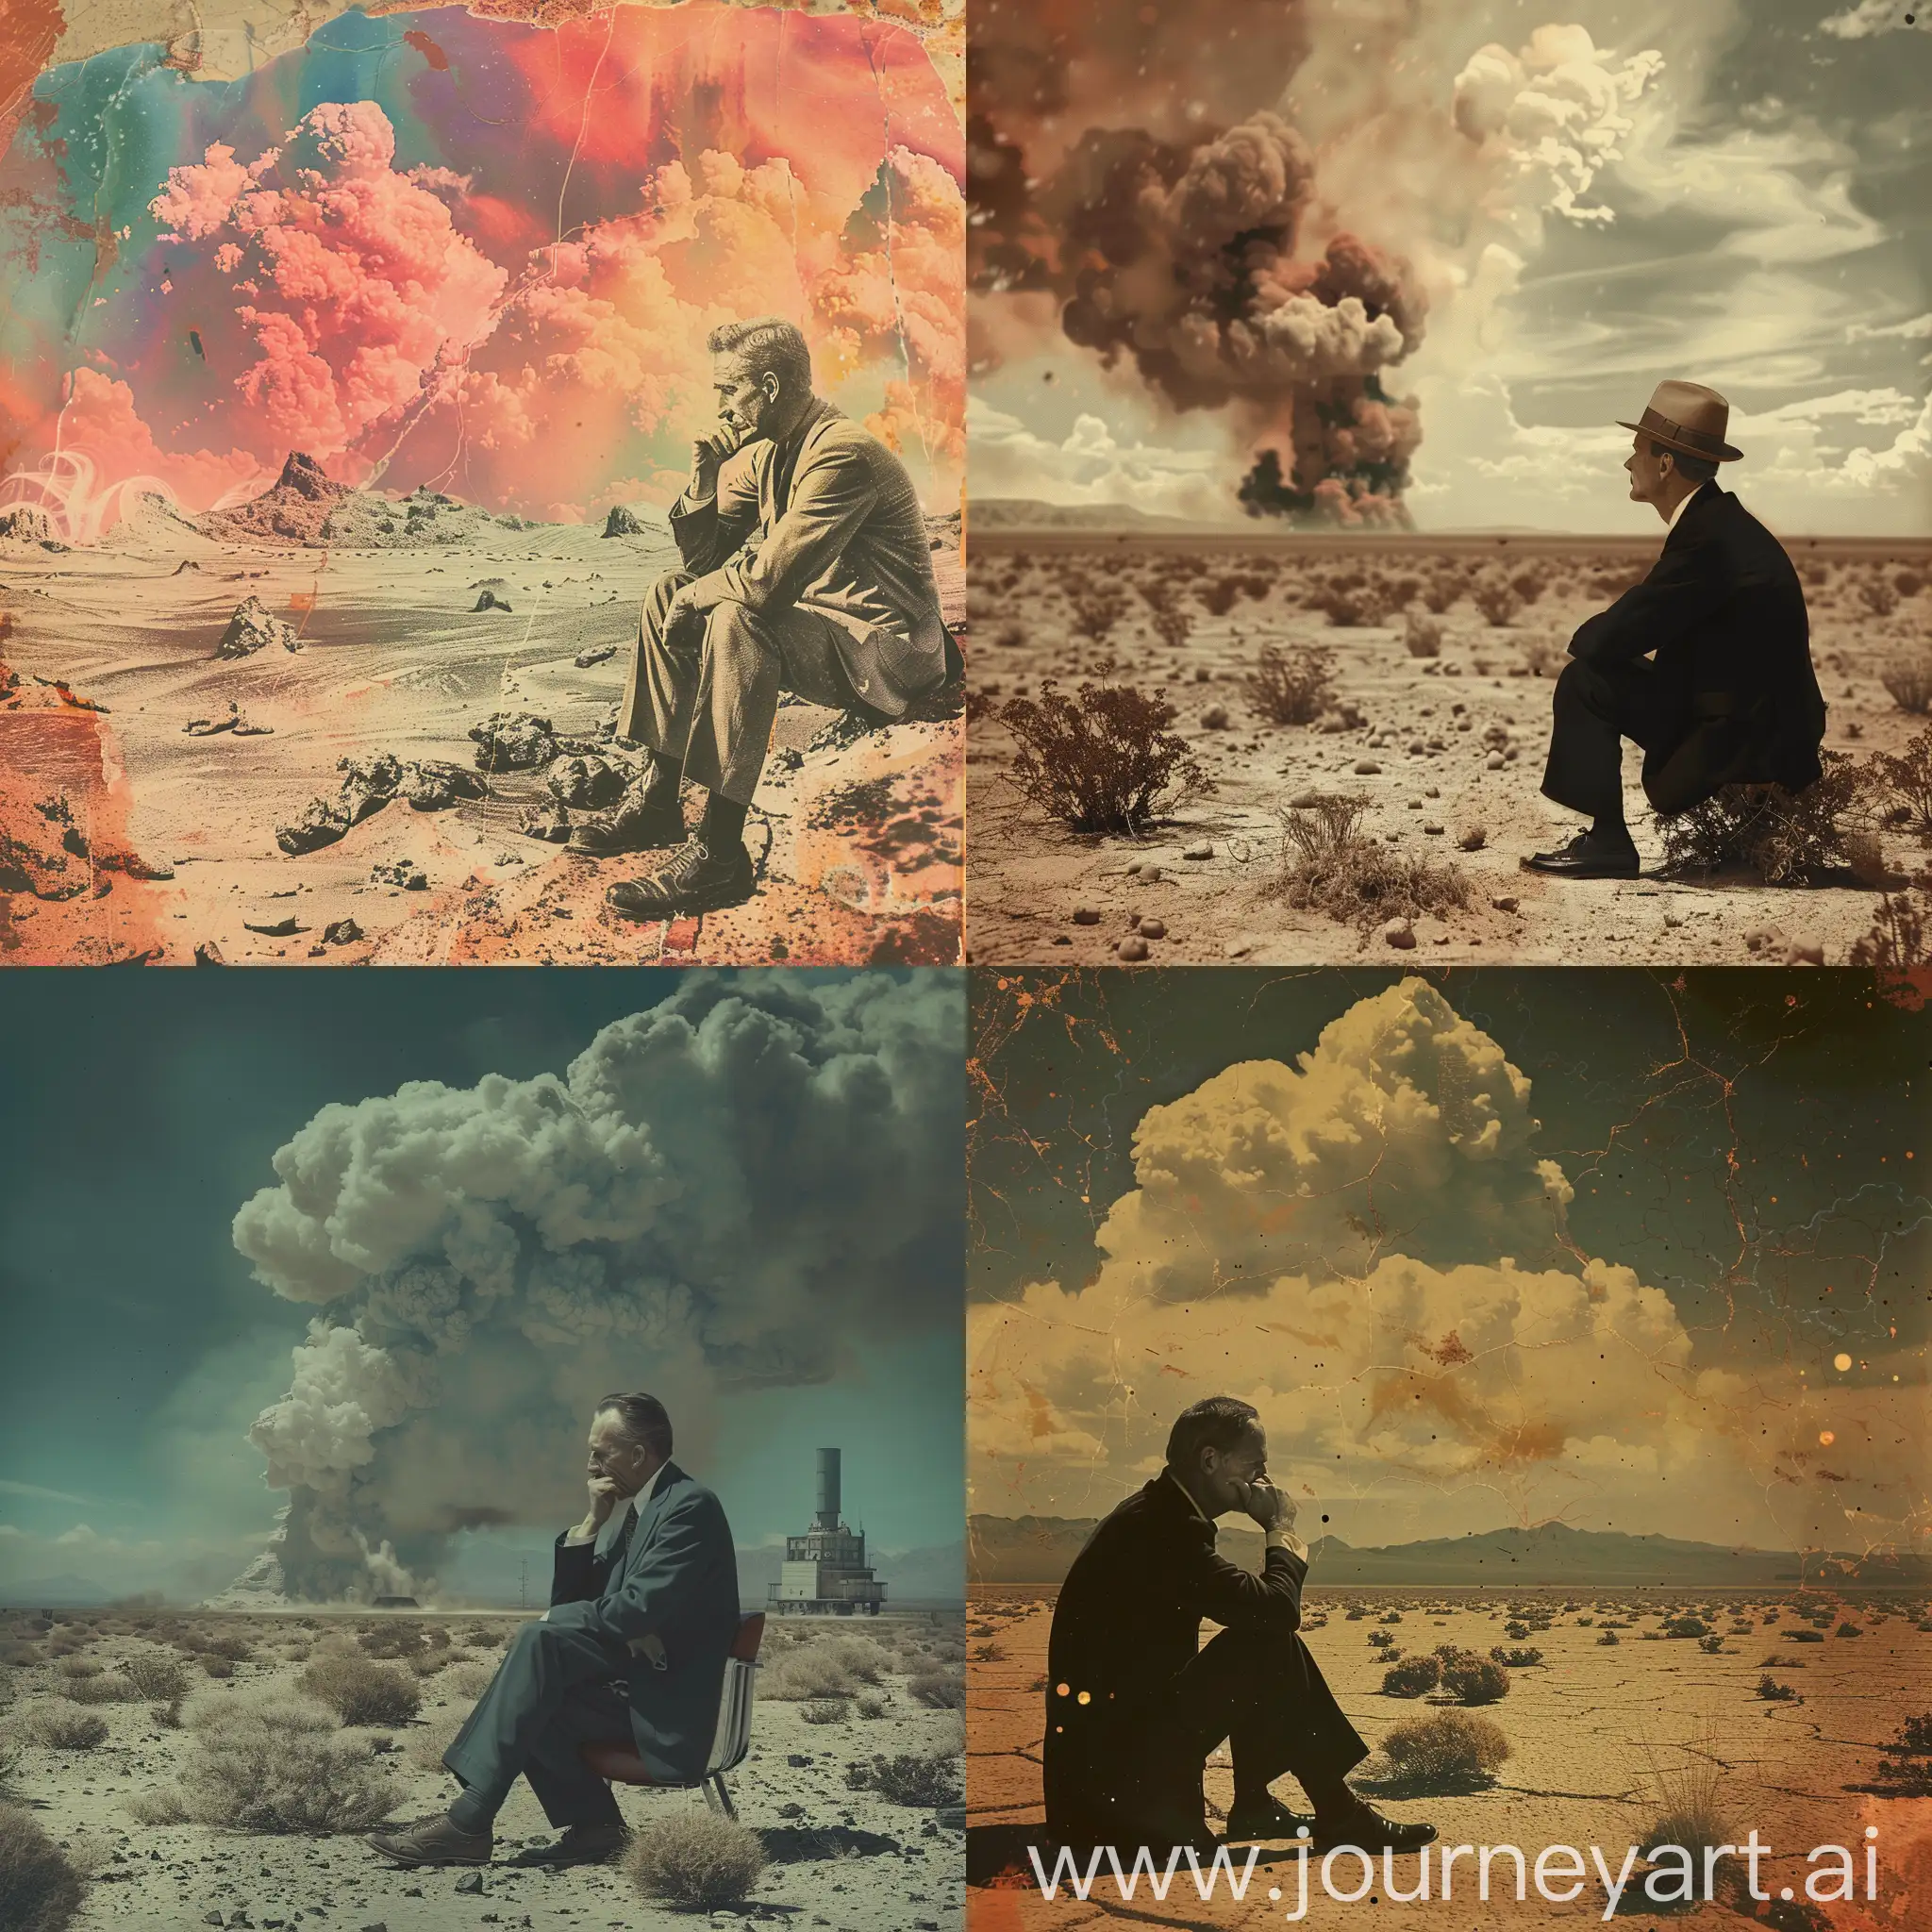 Robert-Oppenheimer-Contemplating-in-a-Surreal-Toxic-Desert